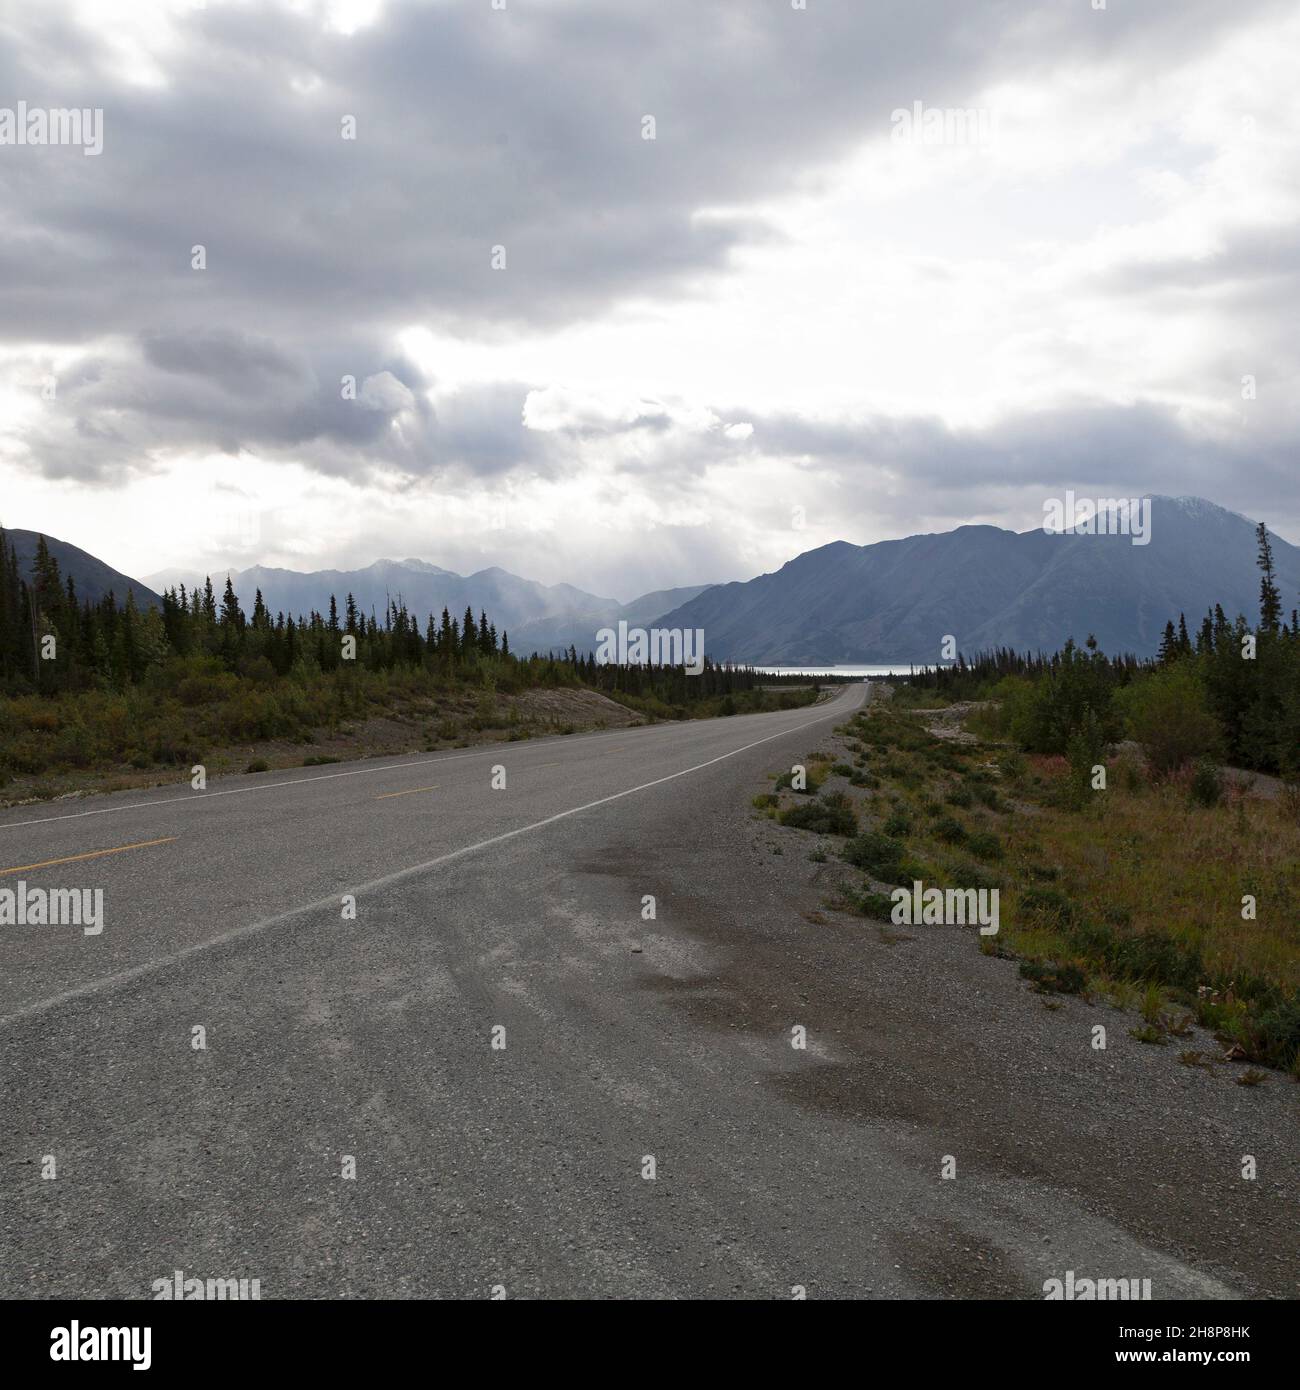 The Alaska Highway in the Yukon, Canada. The road runs towards Kluane Lake and Mount Wallace. Stock Photo